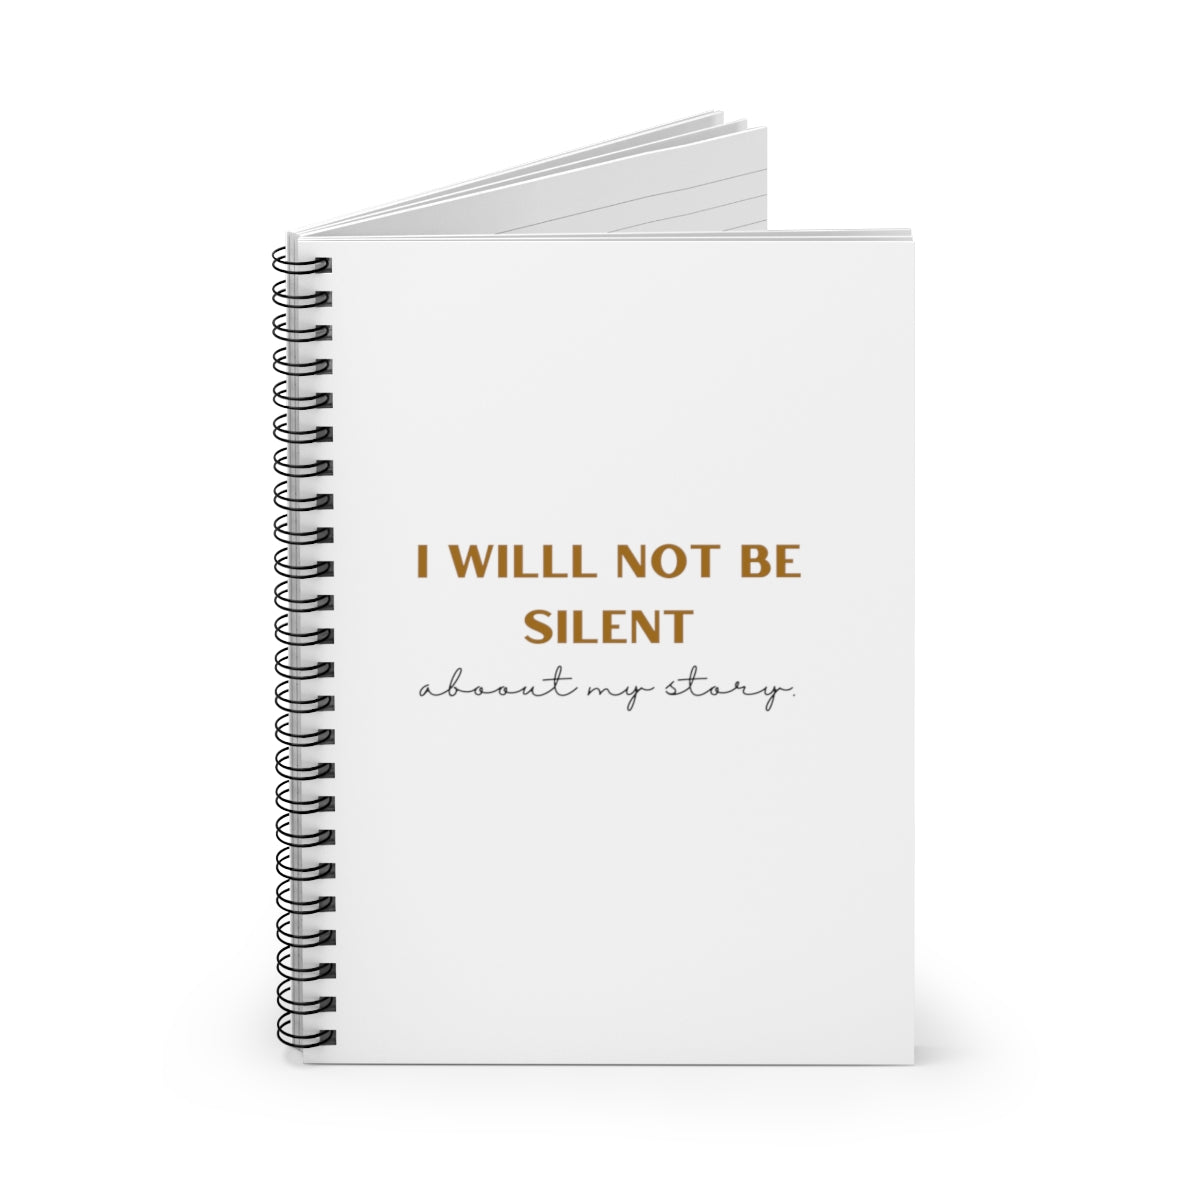 I Will Not Be Silent Motivational Durable Journal- Motivational Notebook, Inspirational Notebooks, Women’s Inspirational Journal, Self-Care Gift for Friends, Daily Motivational Journal